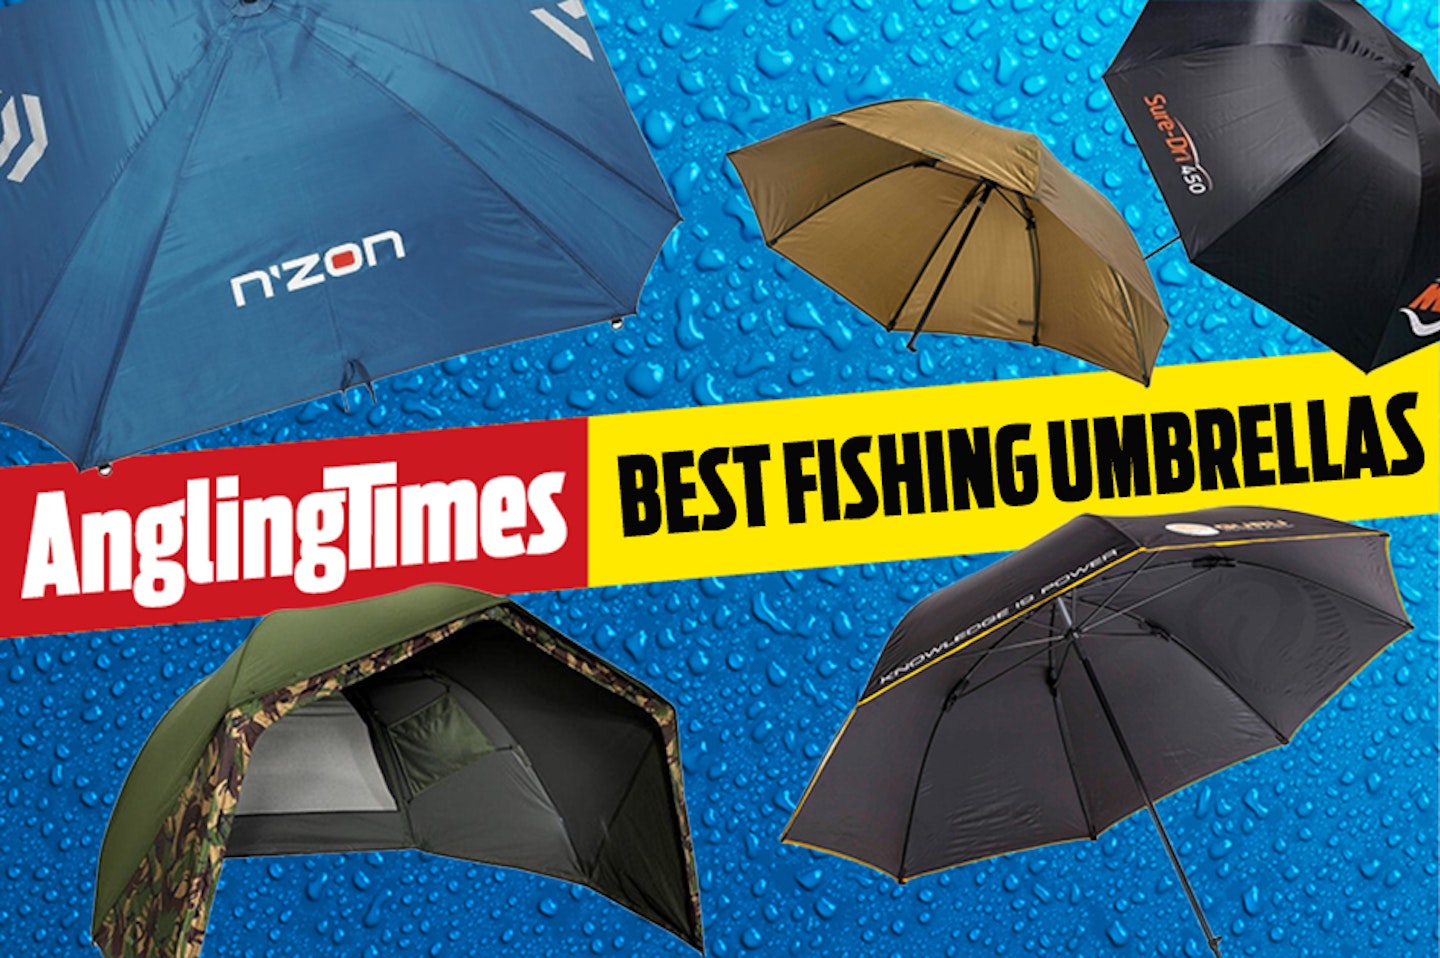 The best fishing umbrellas